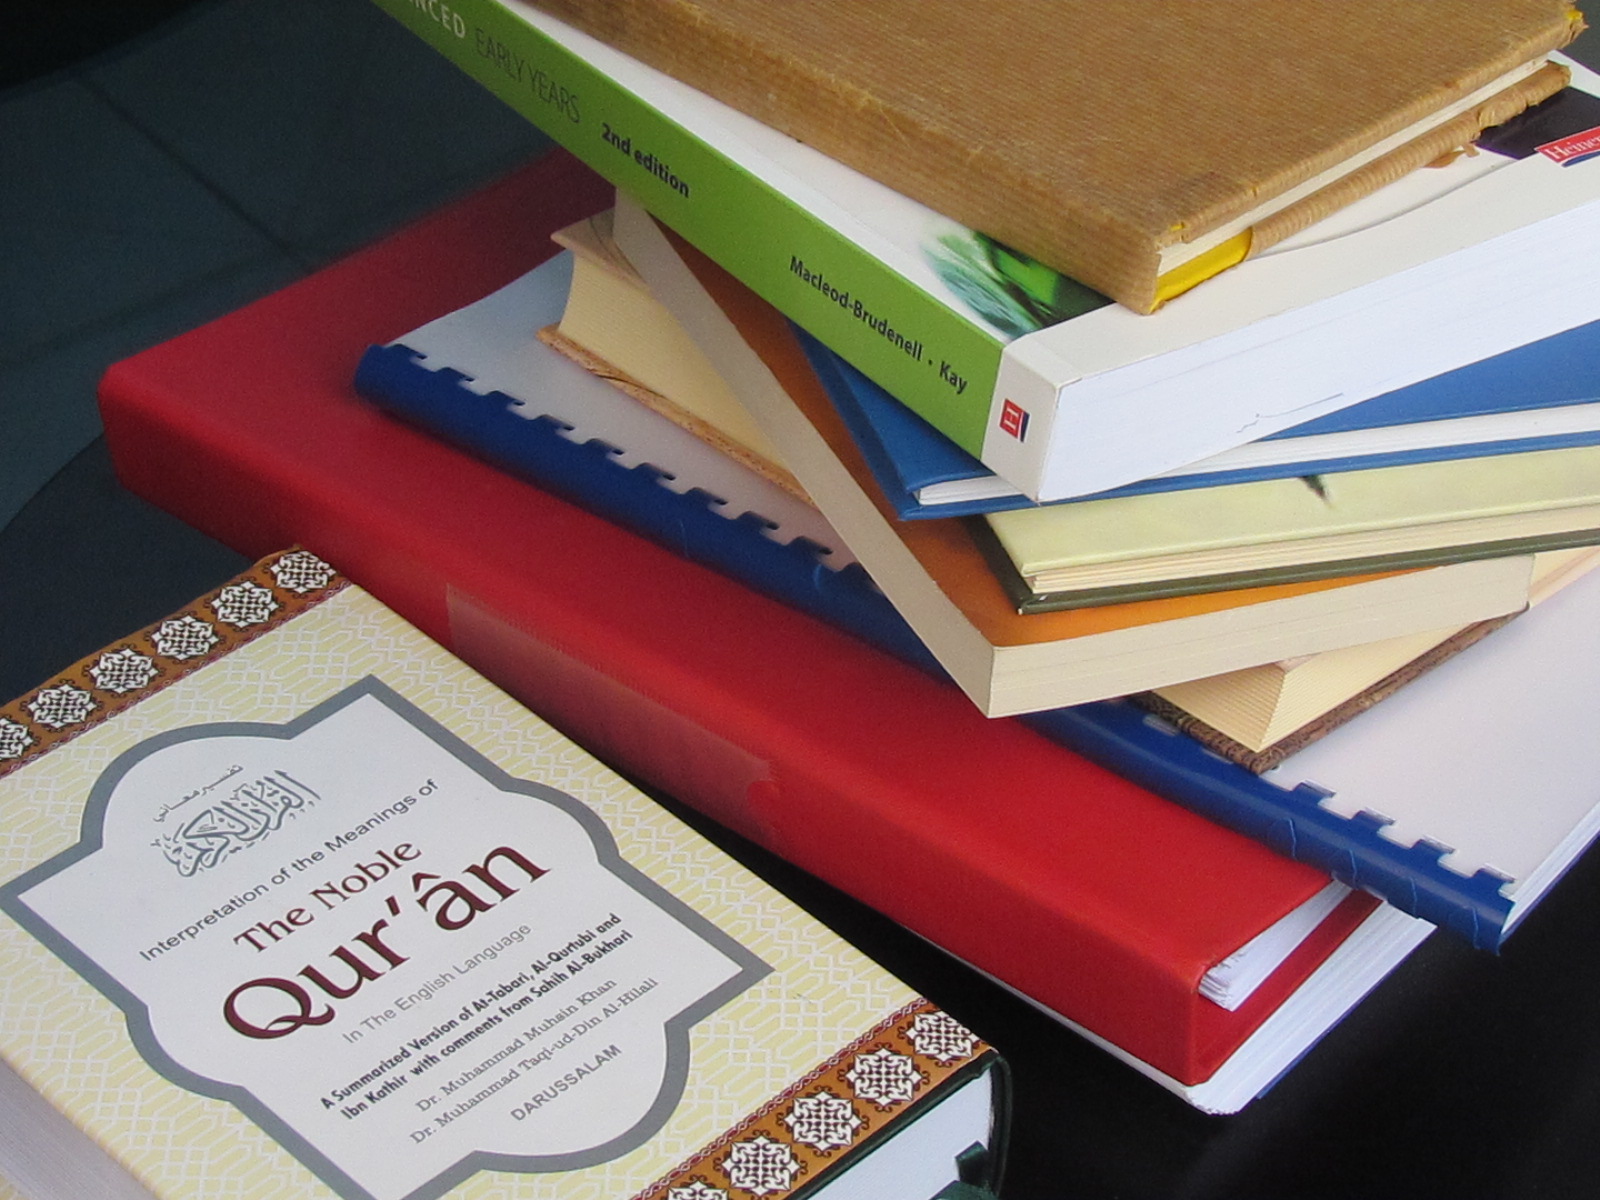 Children Reading Quran